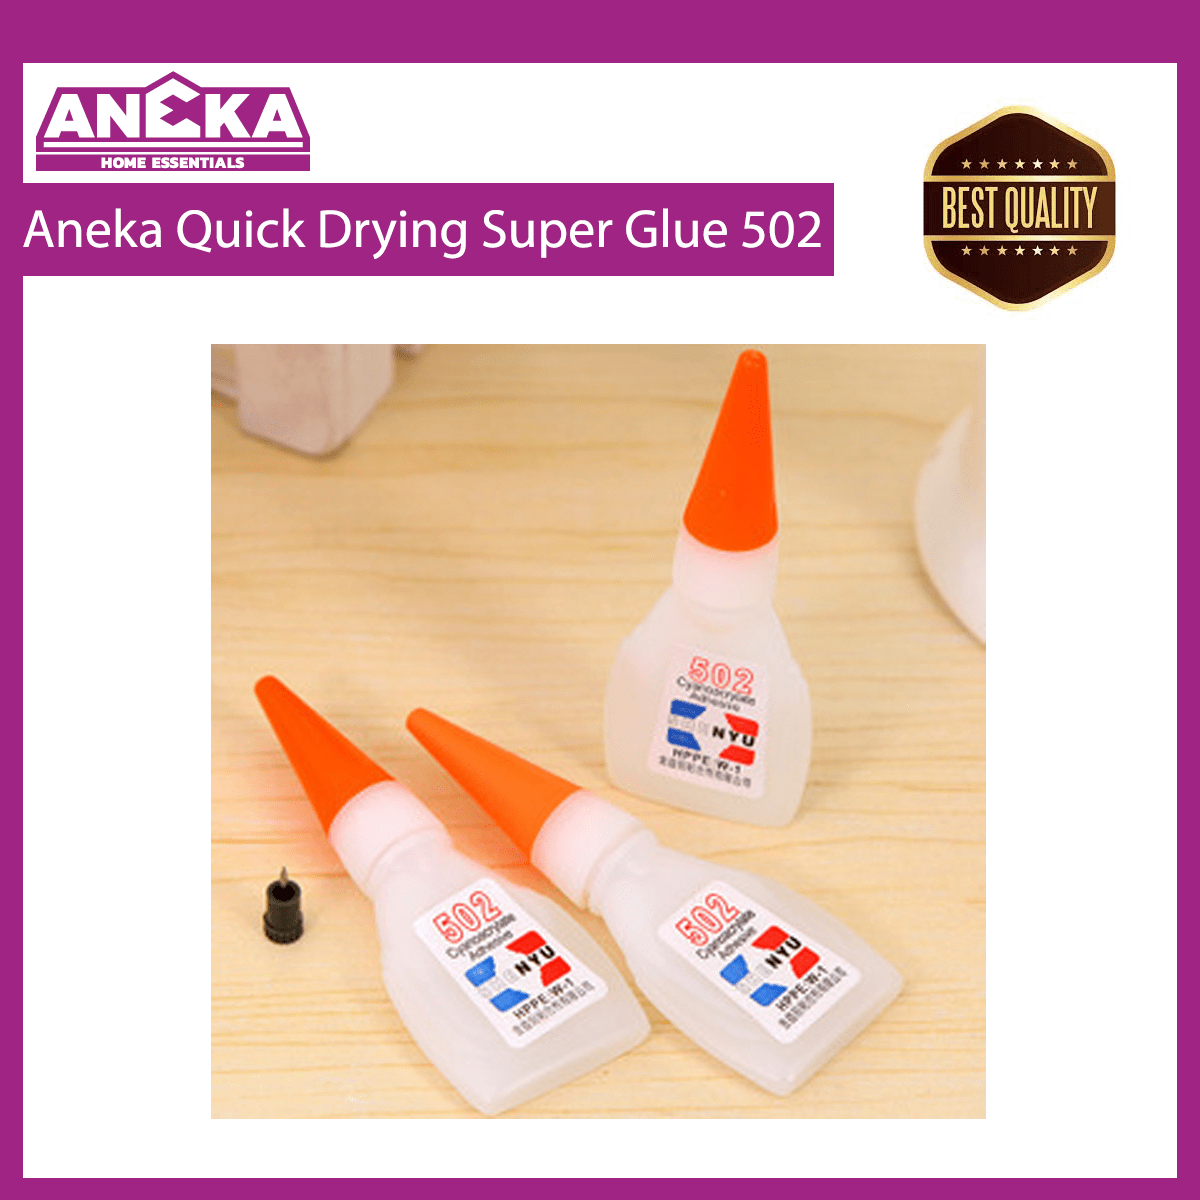 Aneka Quick Drying Super Glue 502